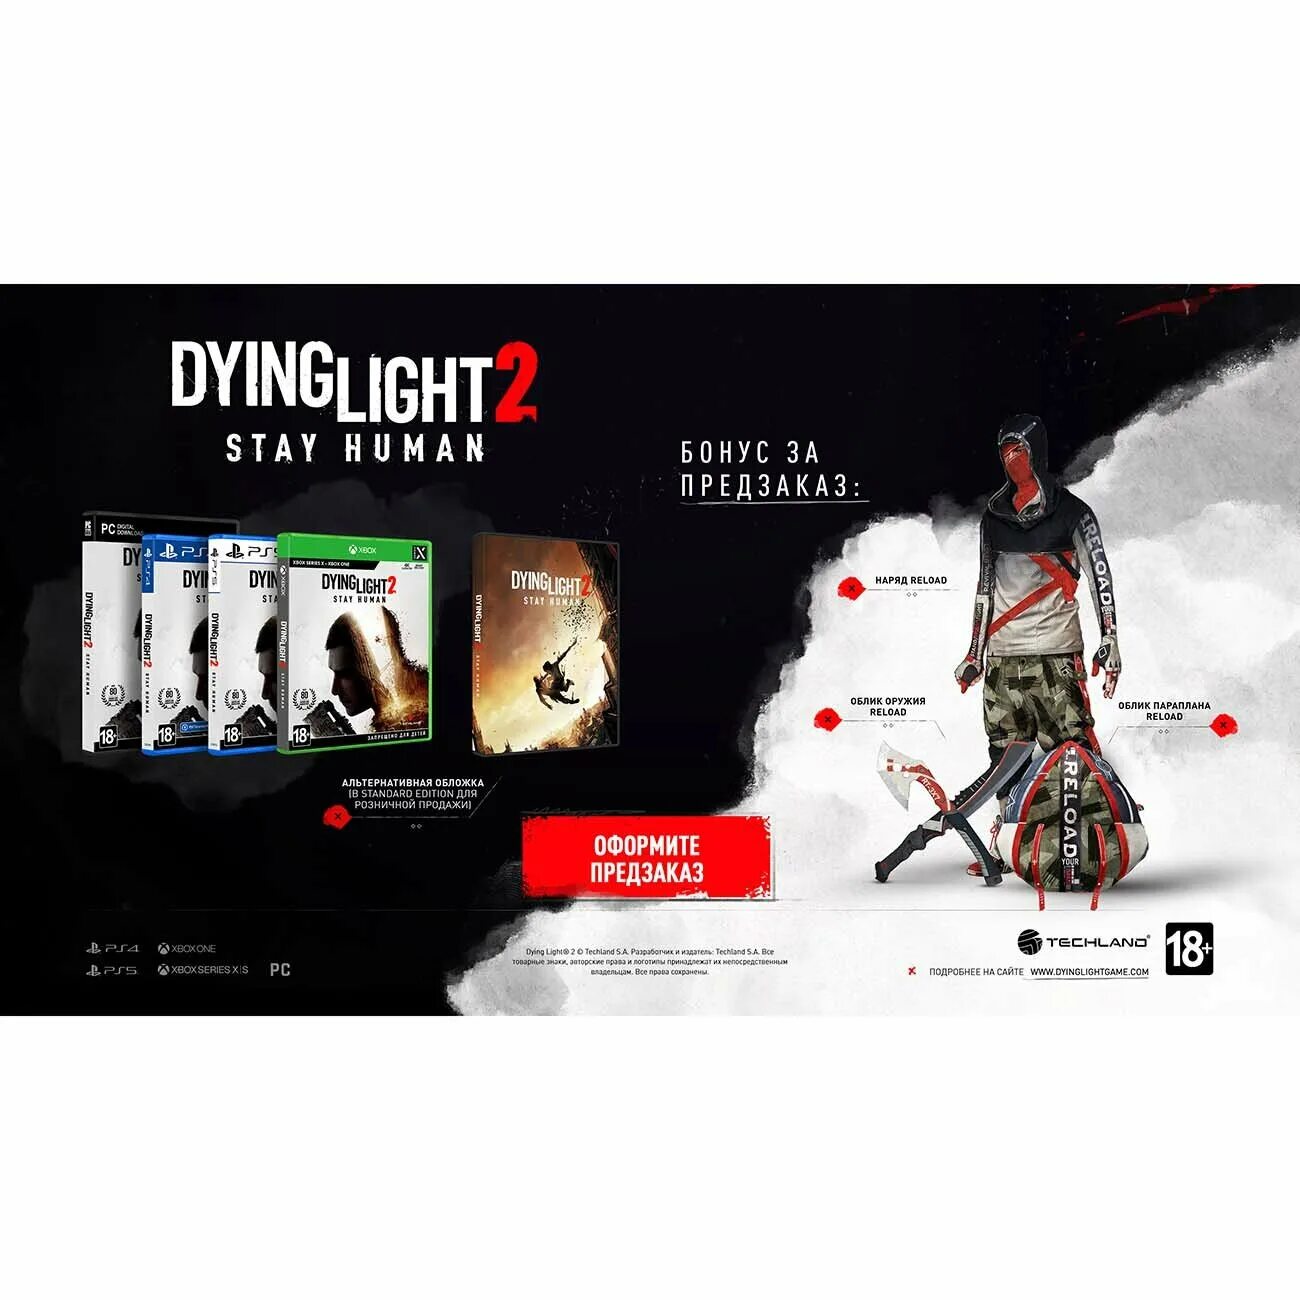 Dying Light 2 коллекционное издание предзаказ. Дайн Лайт 2 коллекционное издание. Dying Light 2 коллекционное издание. Коллекционки Dying Light 2: stay Human.